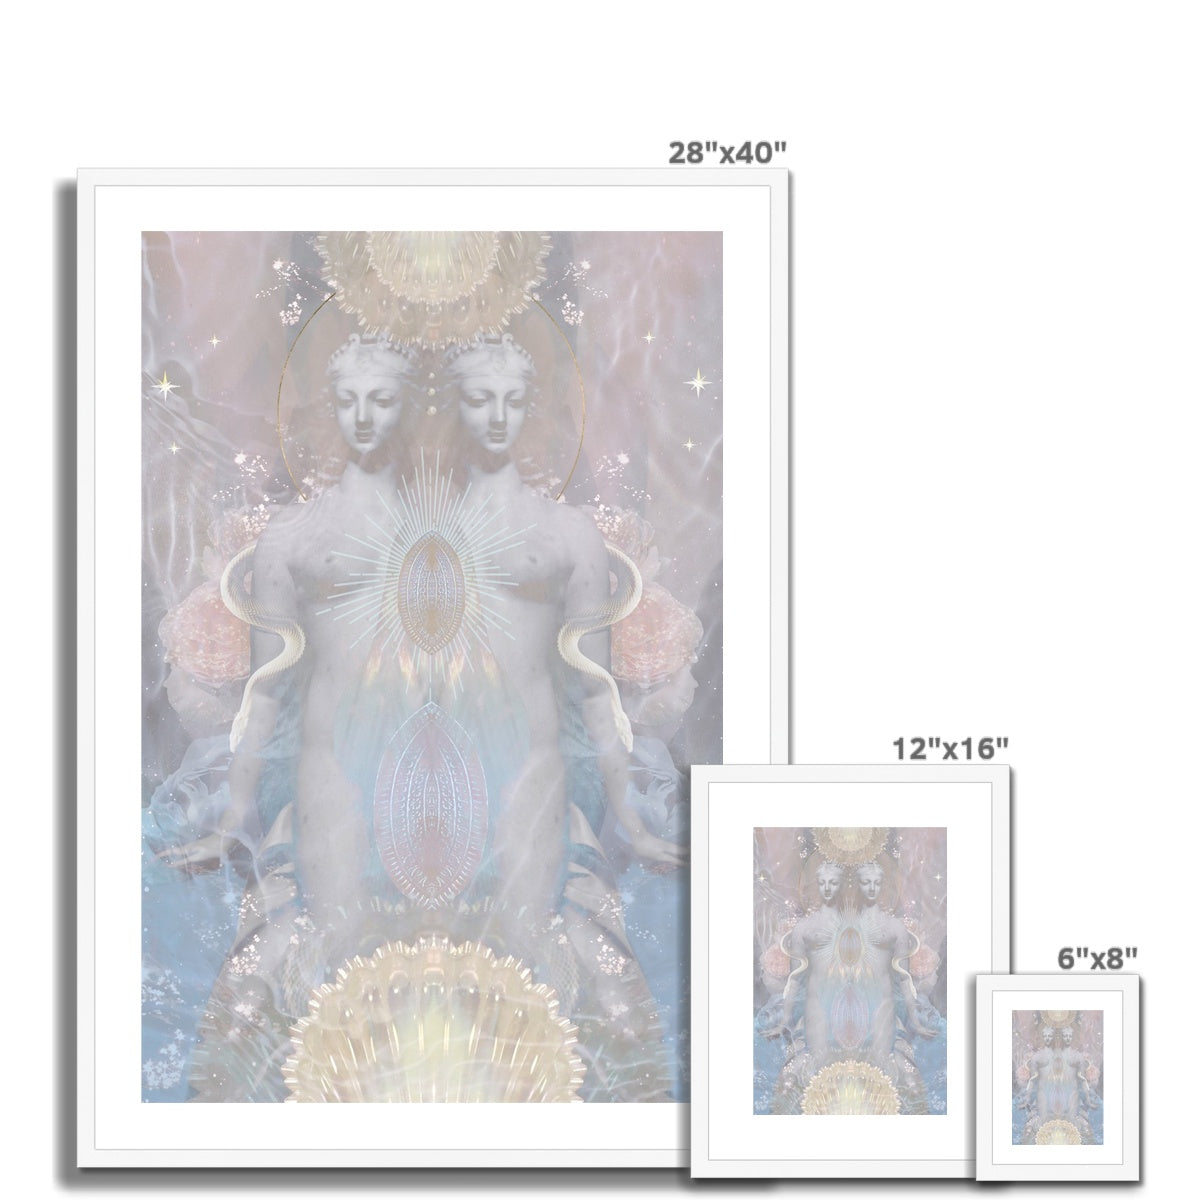 Venus  Framed & Mounted Print - Starseed Designs Inc.